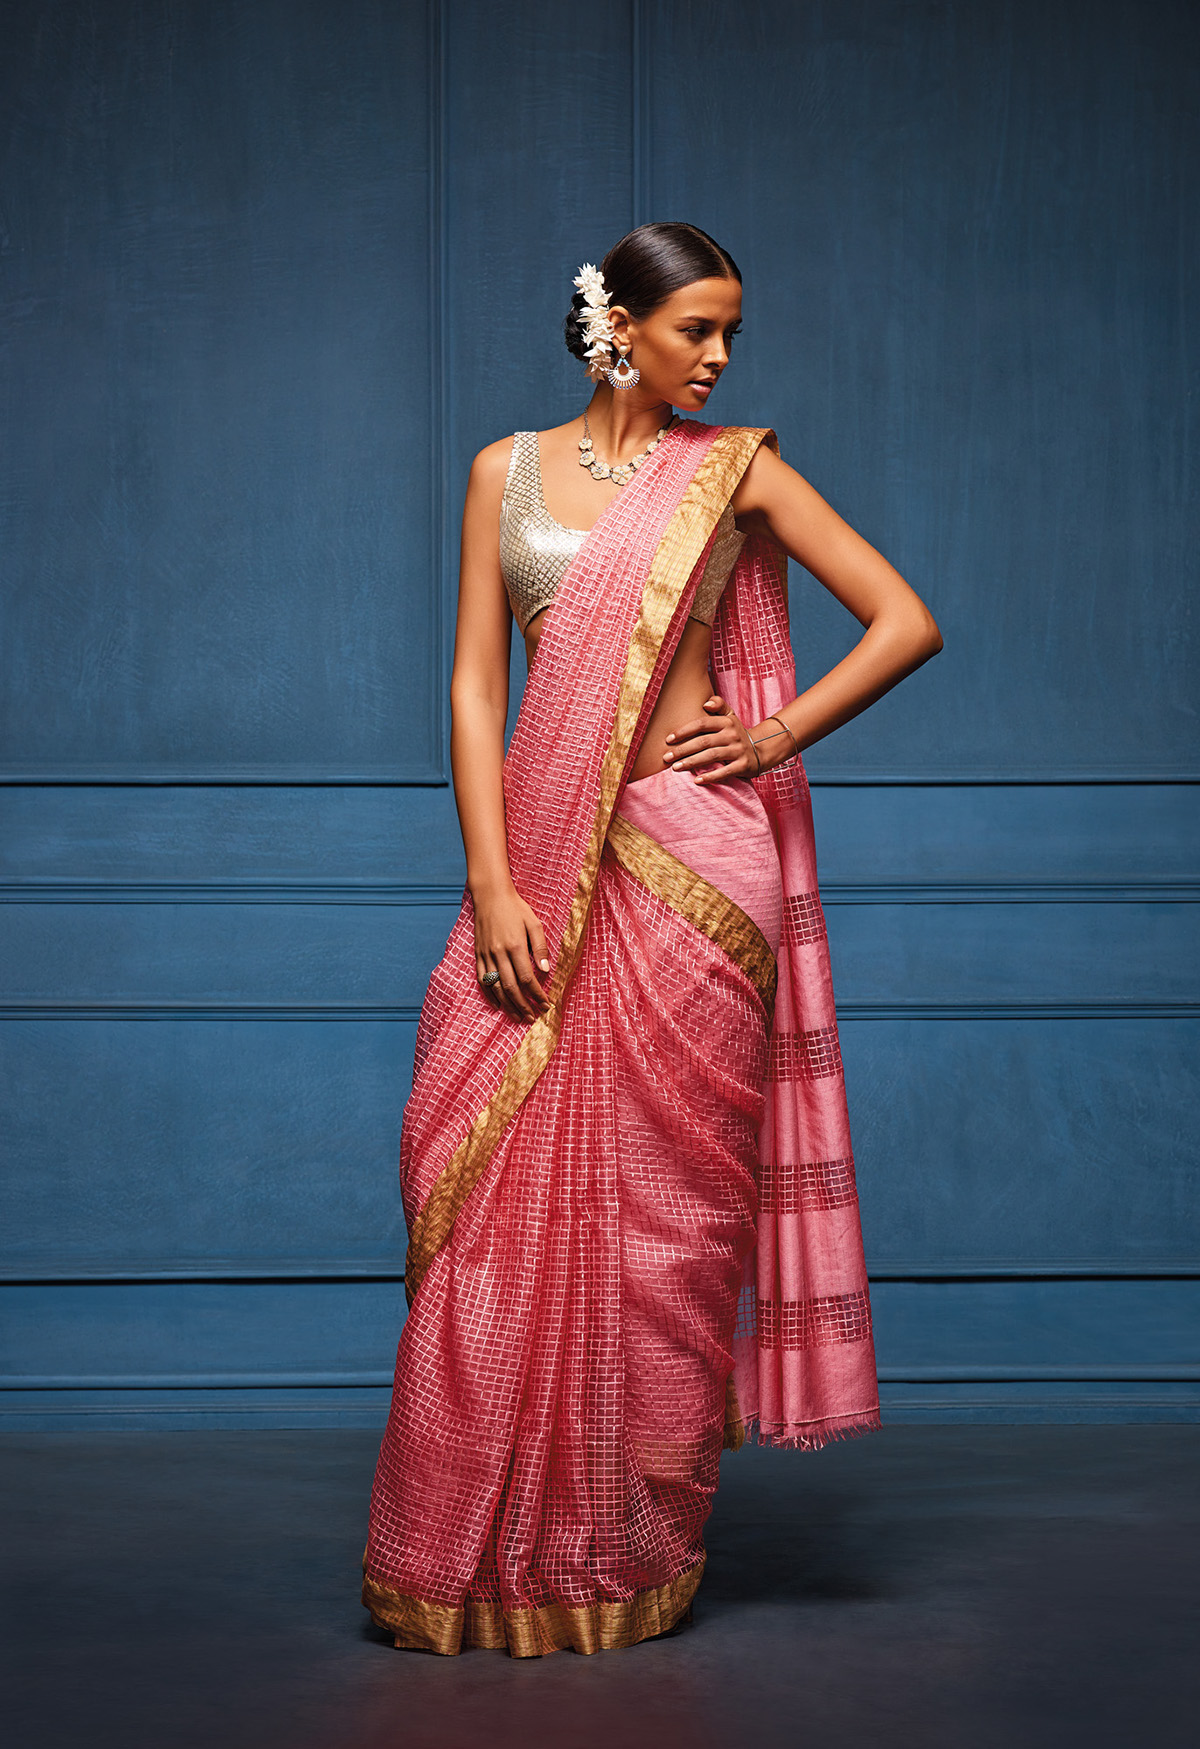 India modern  Liva Sarees liva Sumeet ballal photography campaignshoot fashionphotographyindia Indianfashion indianfashionphotography MUMBAIFASHIONPHOTOGRAPHER